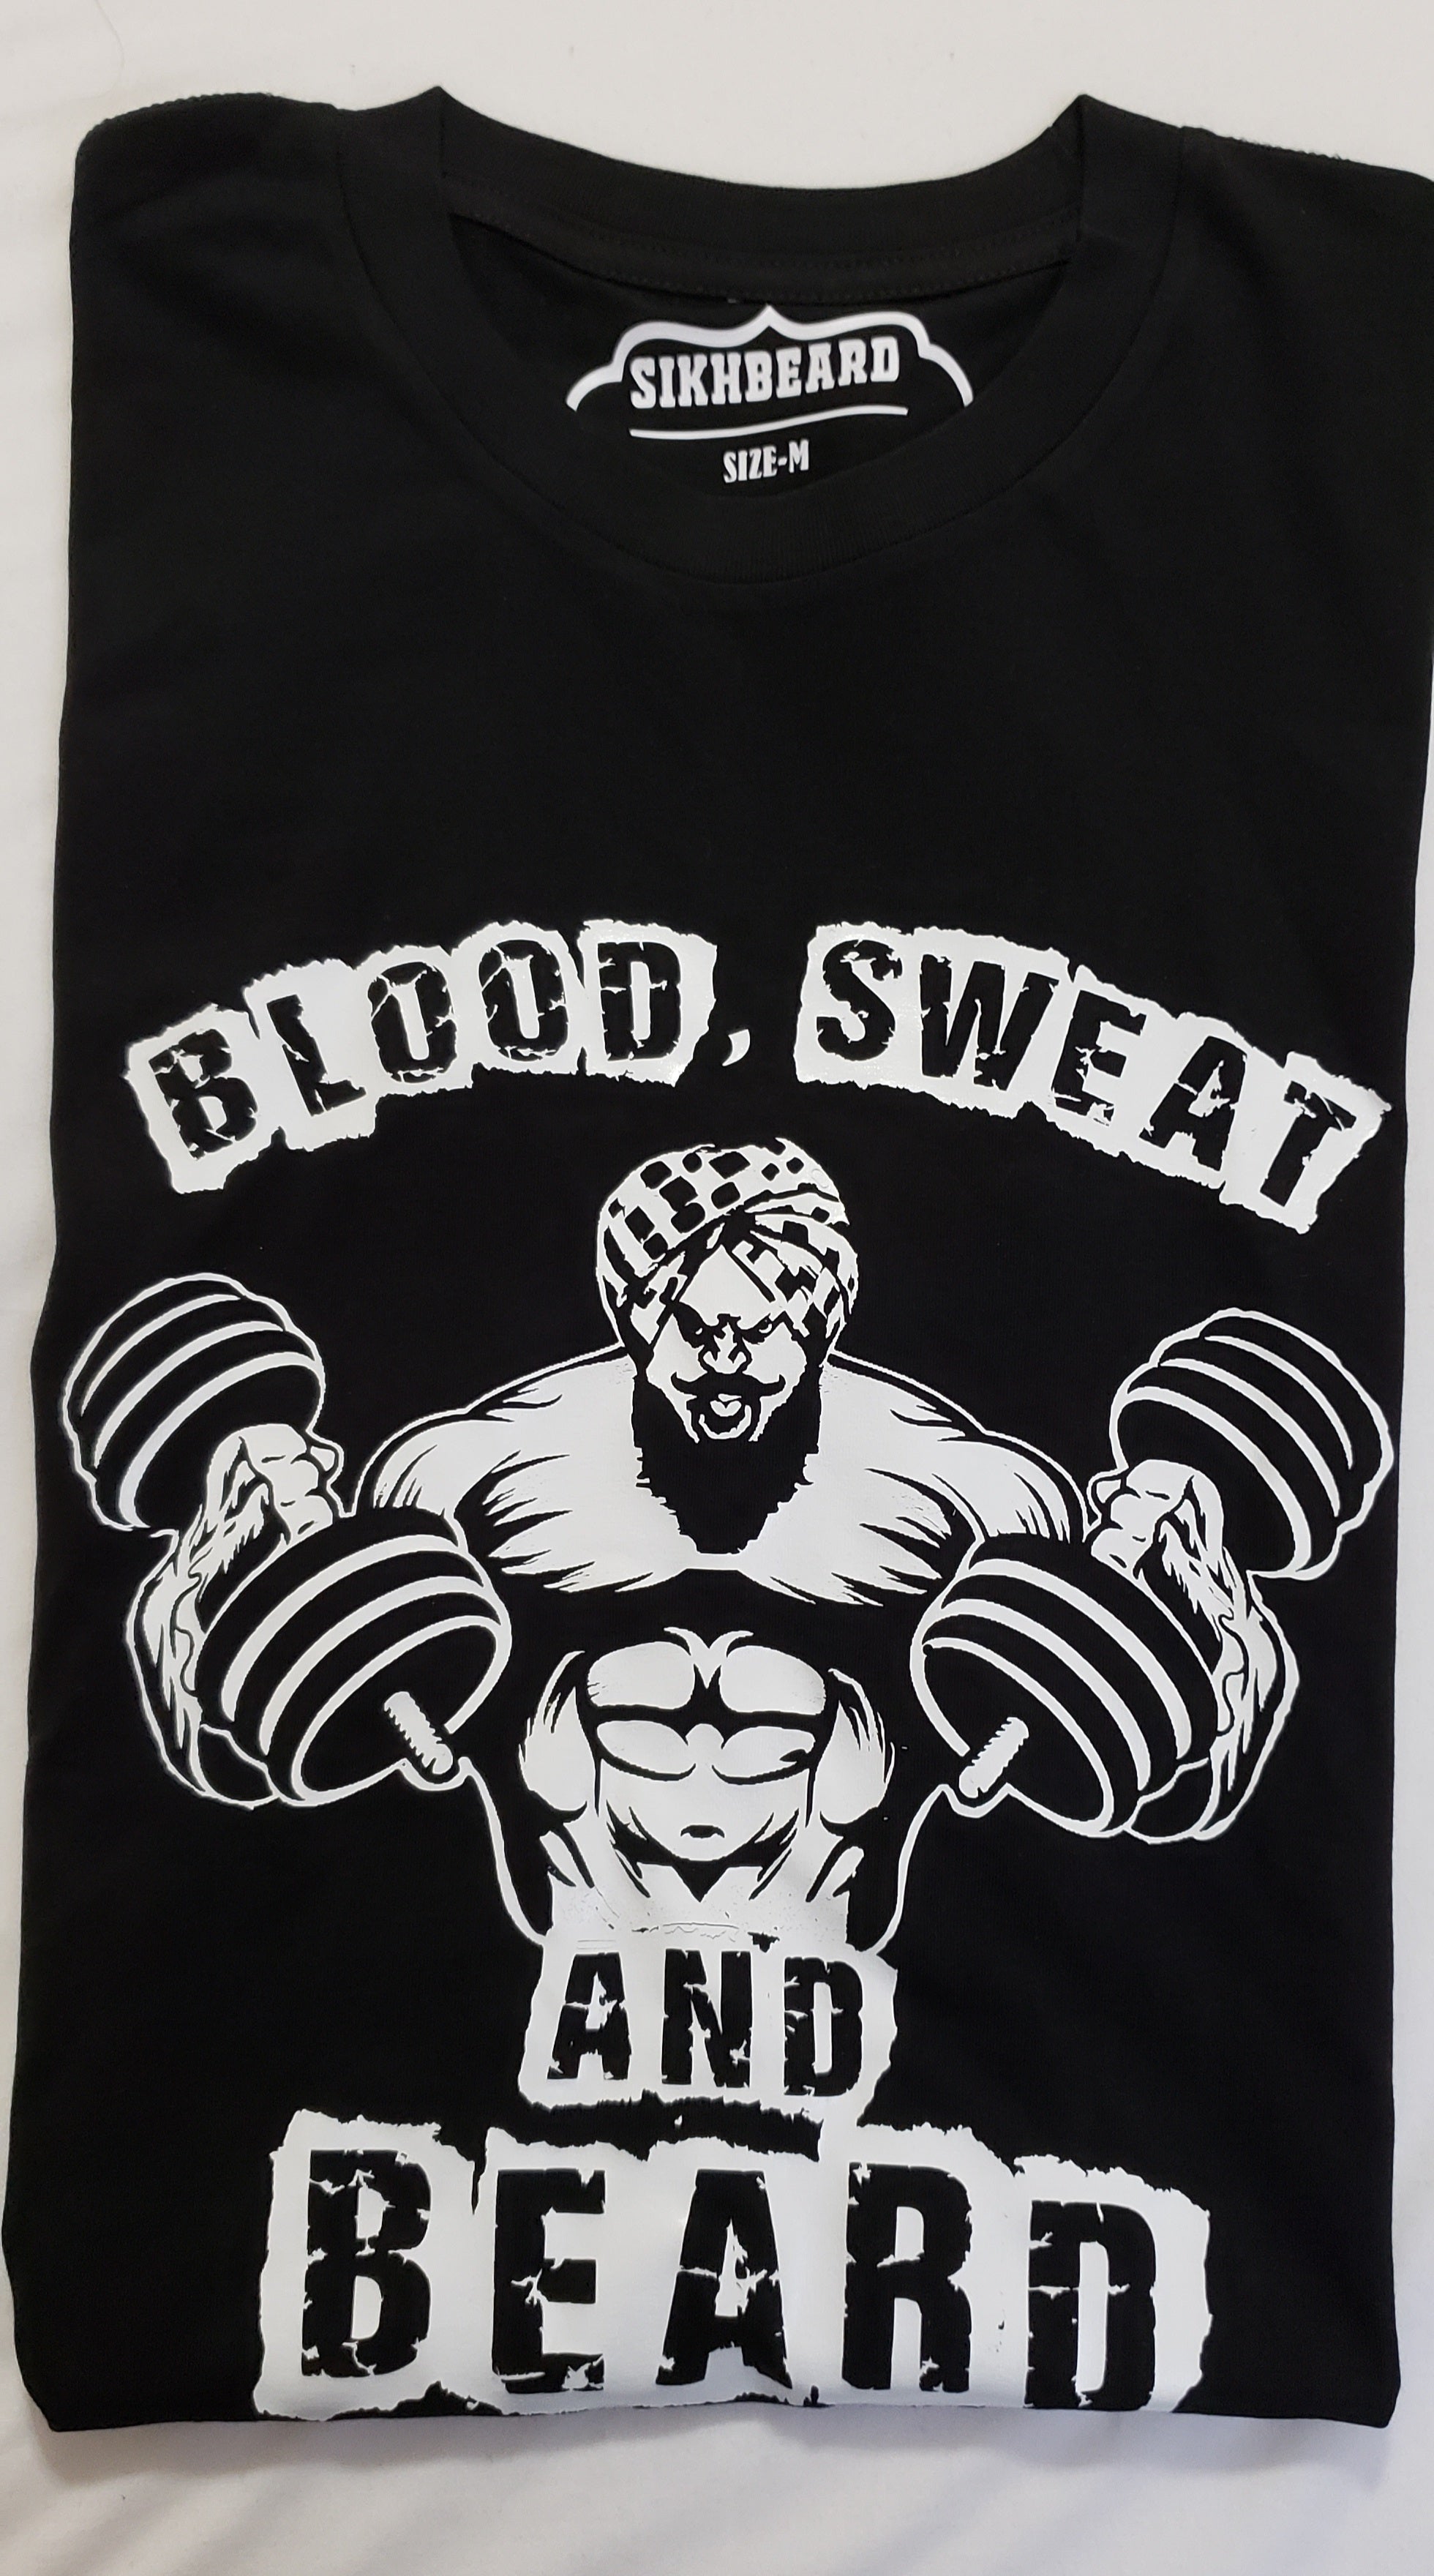 Blood Sweat And Beard T-Shirt/Full Sleeve